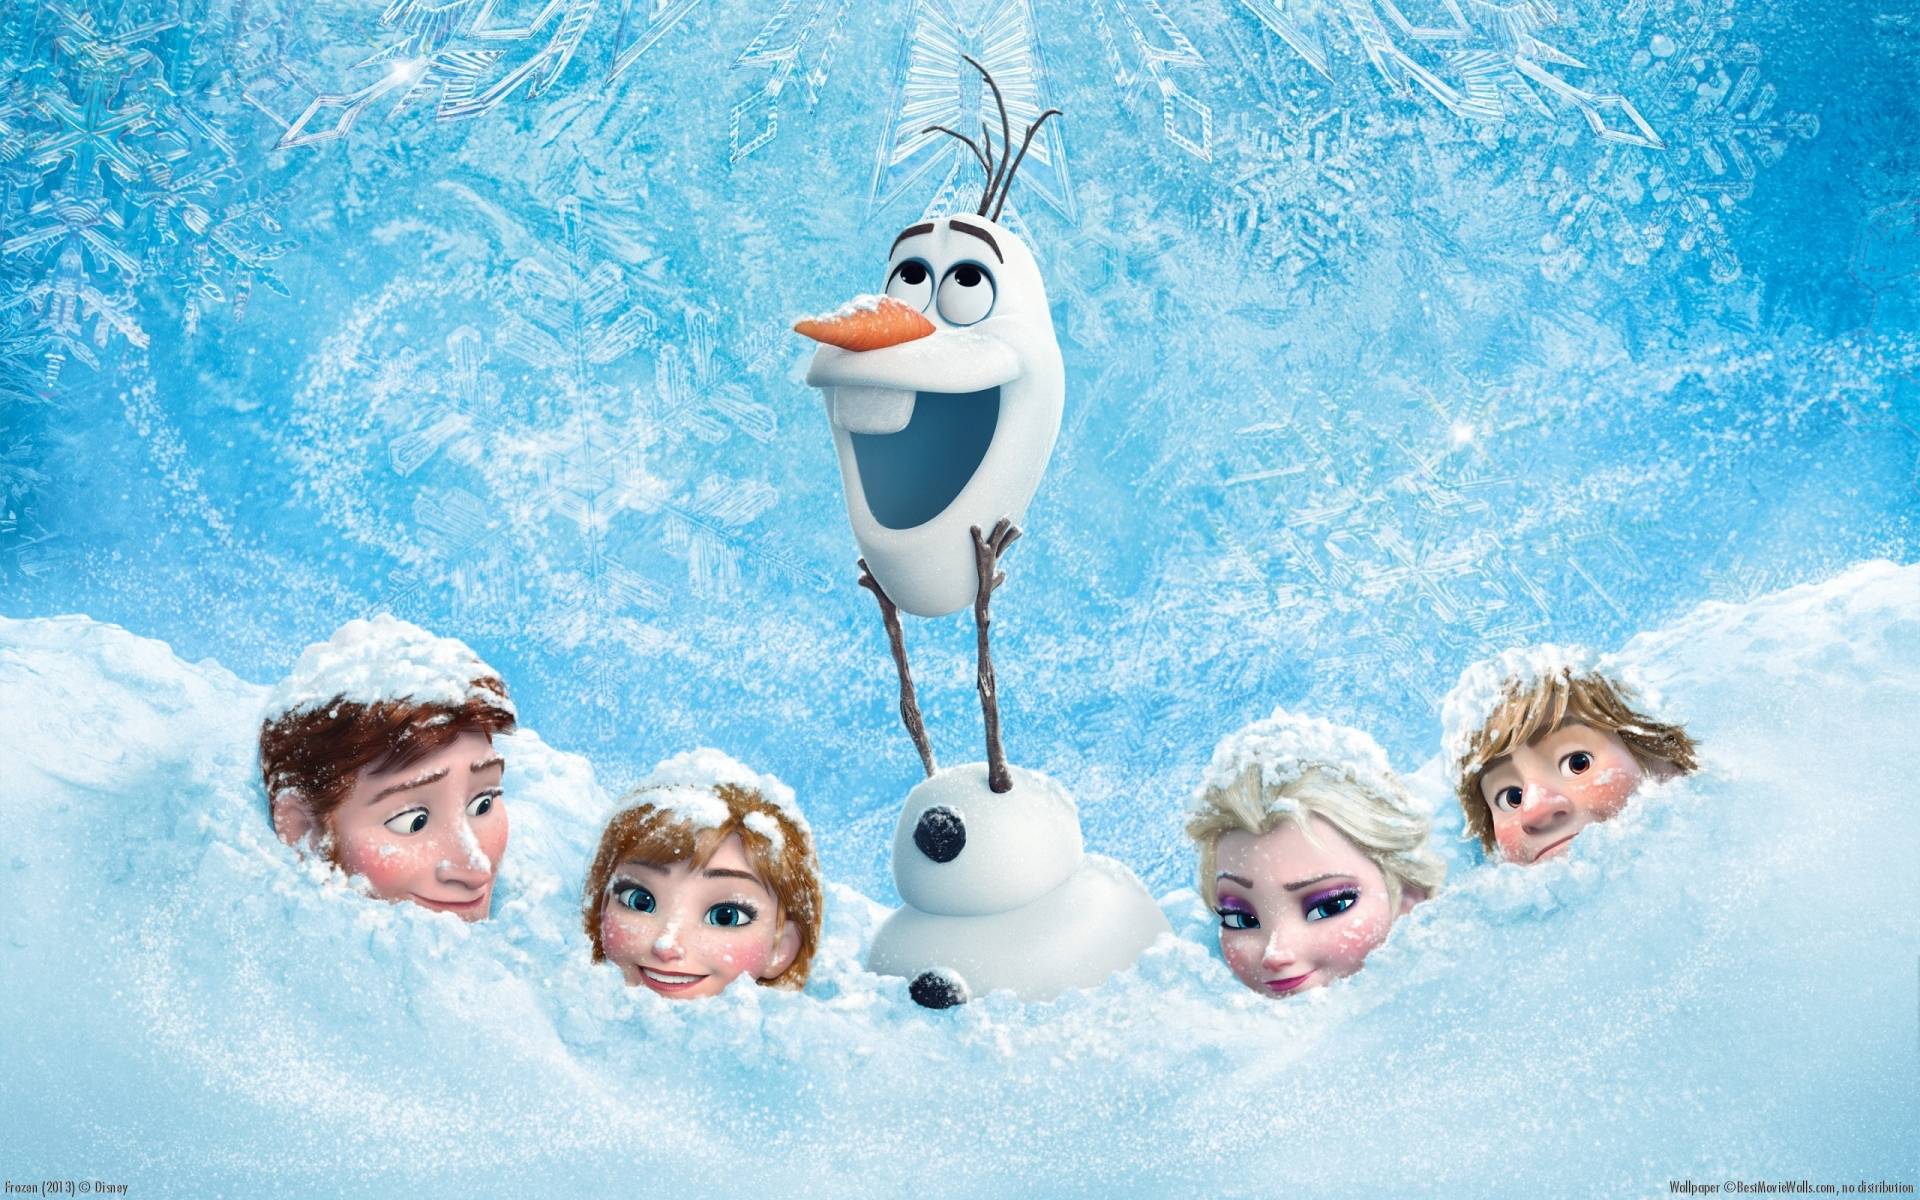 Funny Olaf Frozen Movie Wallpaper. Foolhardi